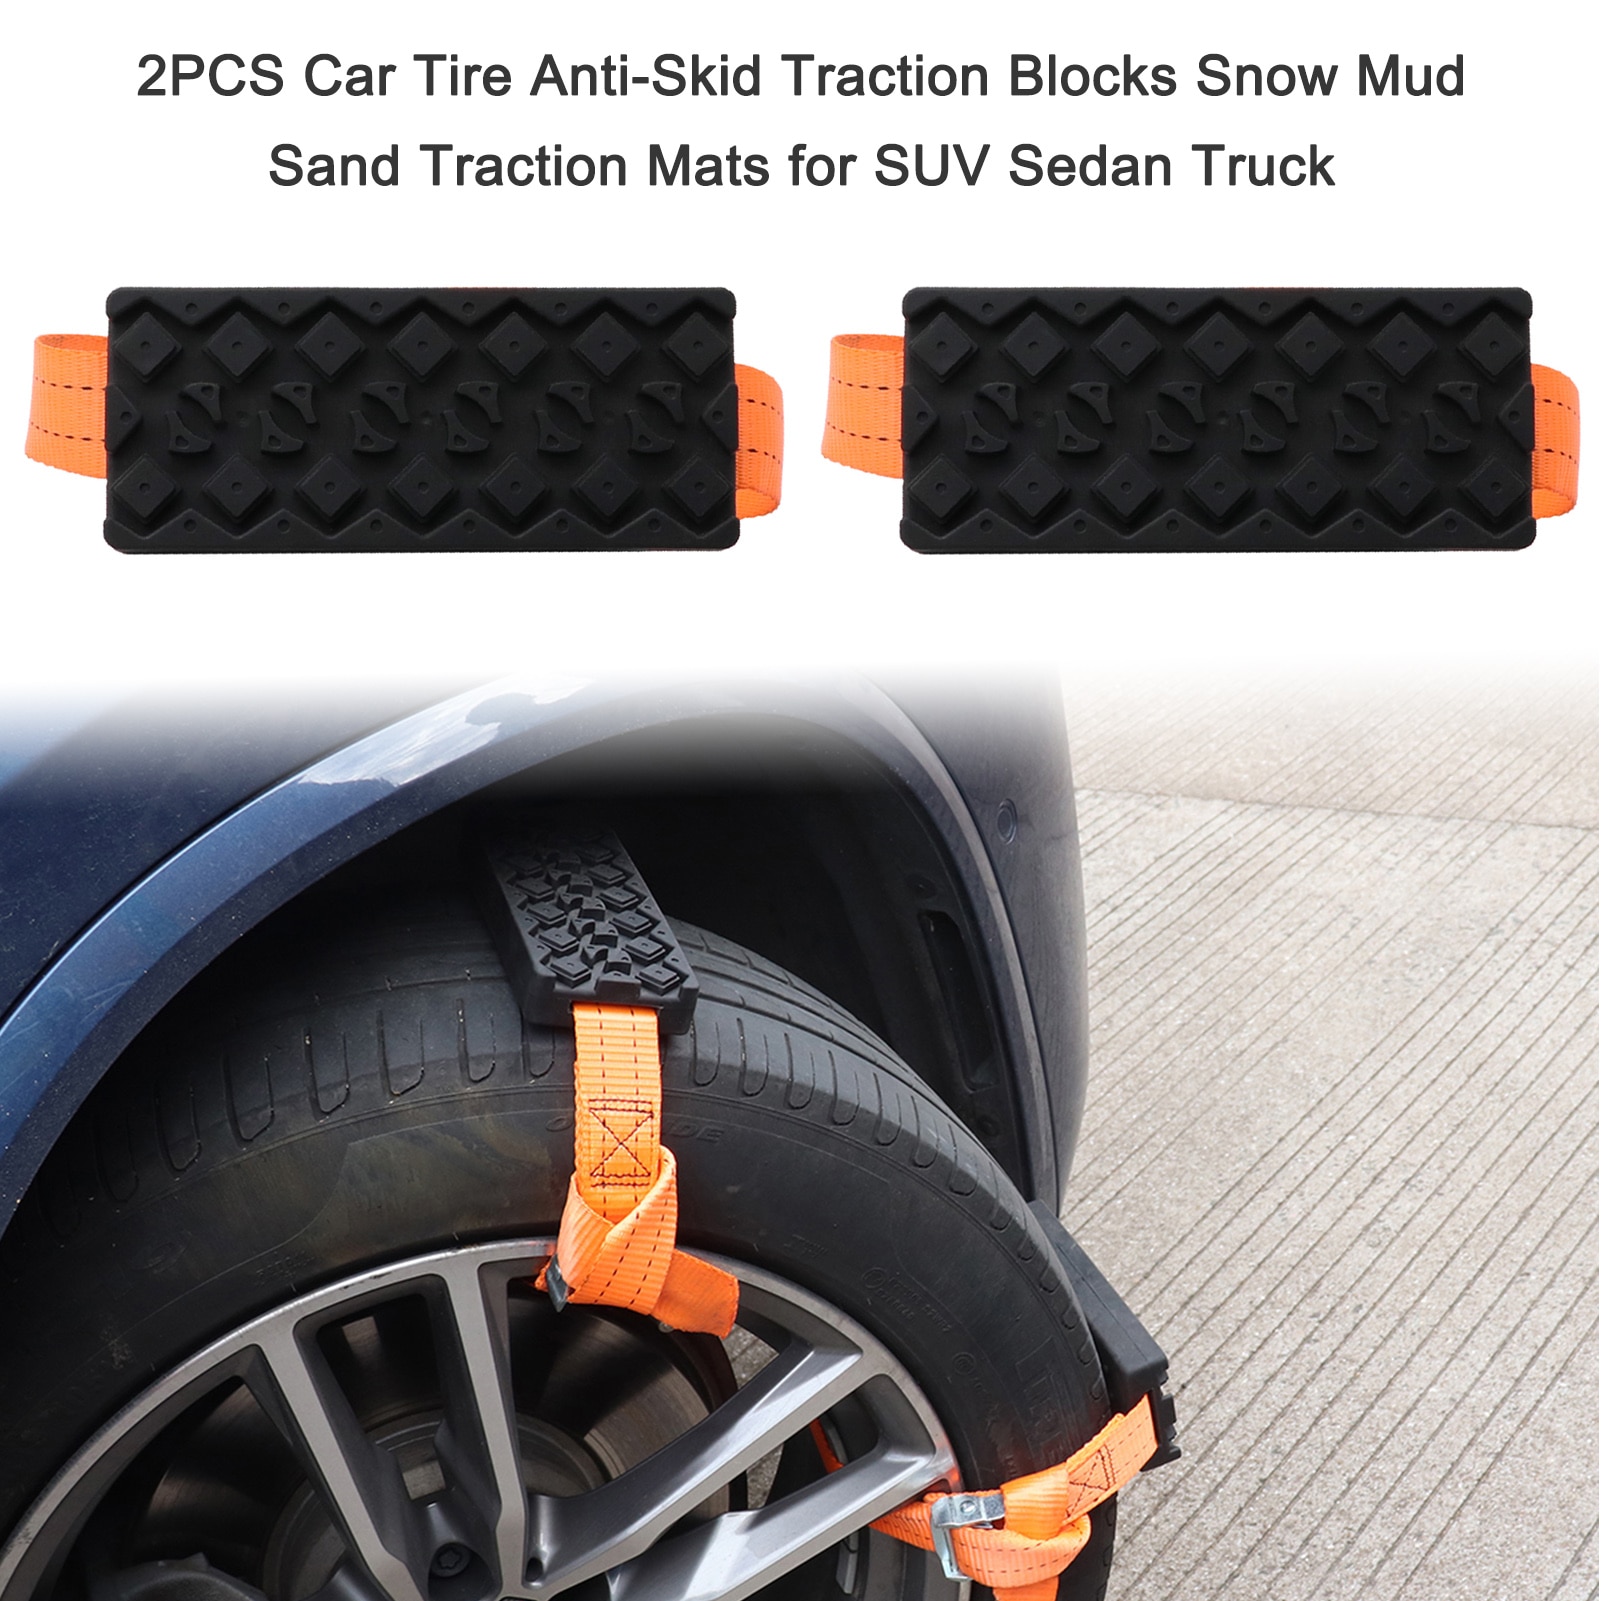 2 stk bildæk antiskrid trækkraft blokke sne mudder sand trækkraft måtter til suv sedan